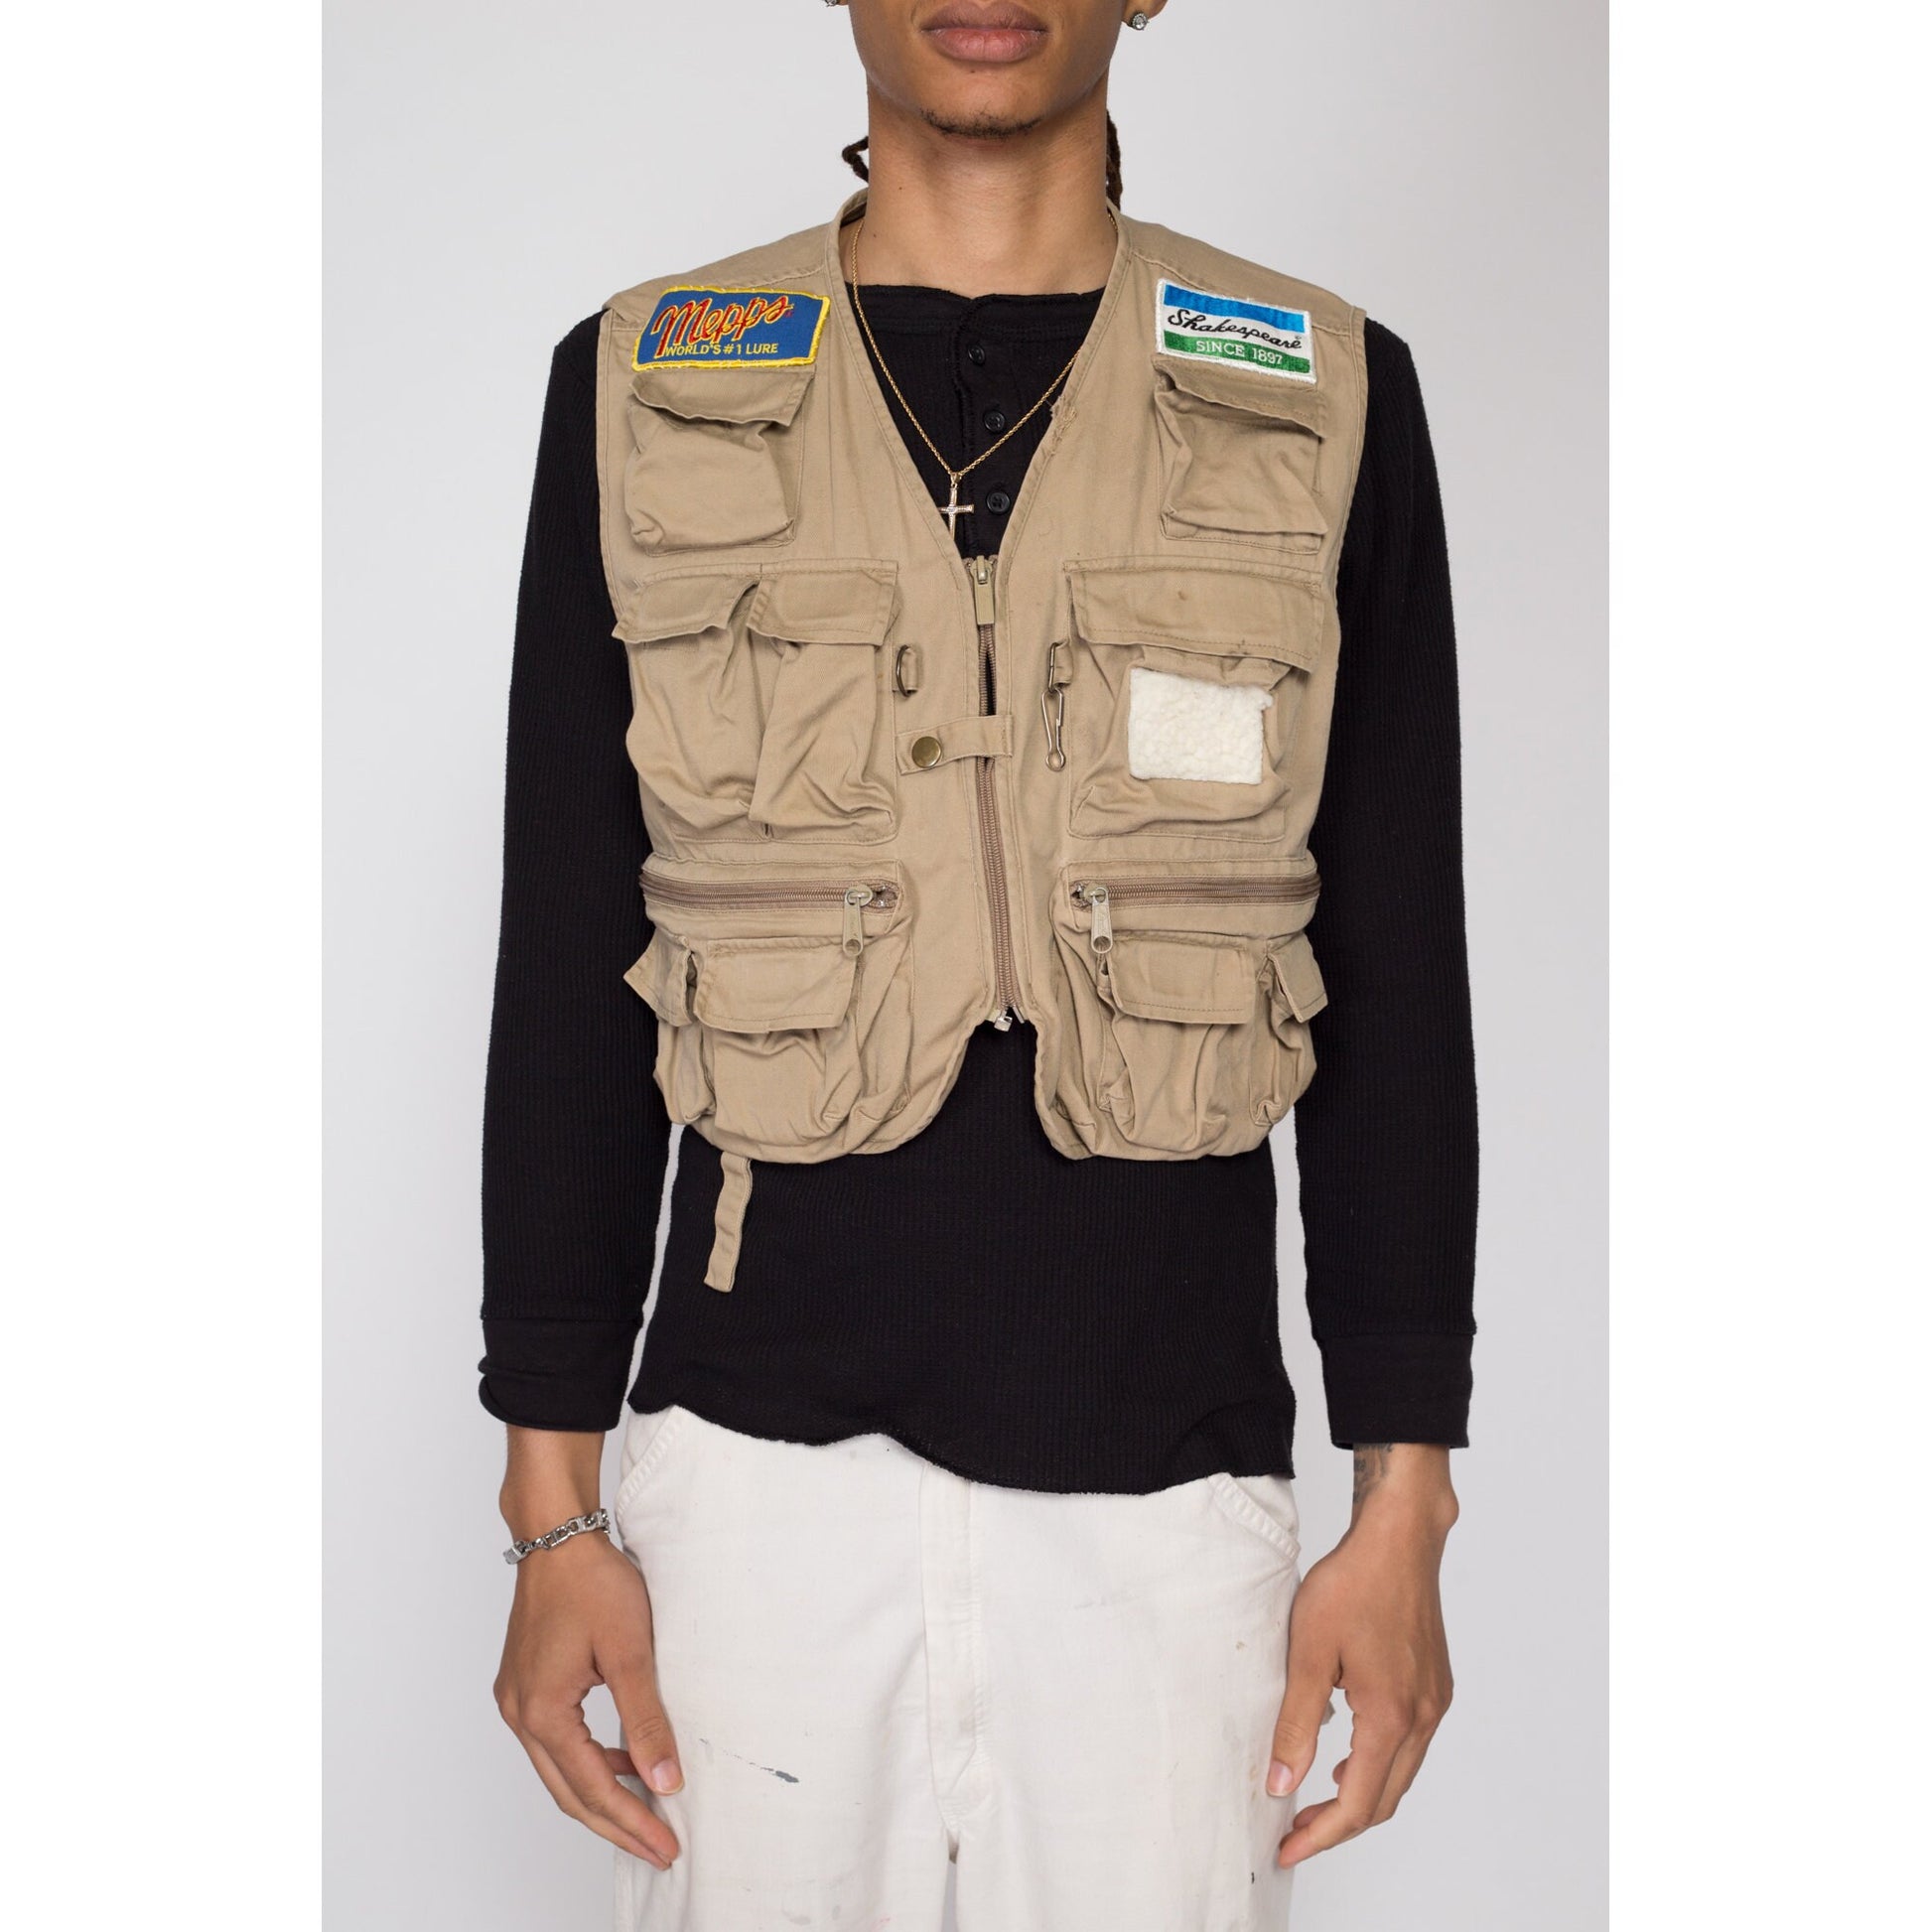 Medium 80s Khaki Fishing Tackle Vest | Vintage Zip Up Sleeveless Workwear Field Jacket